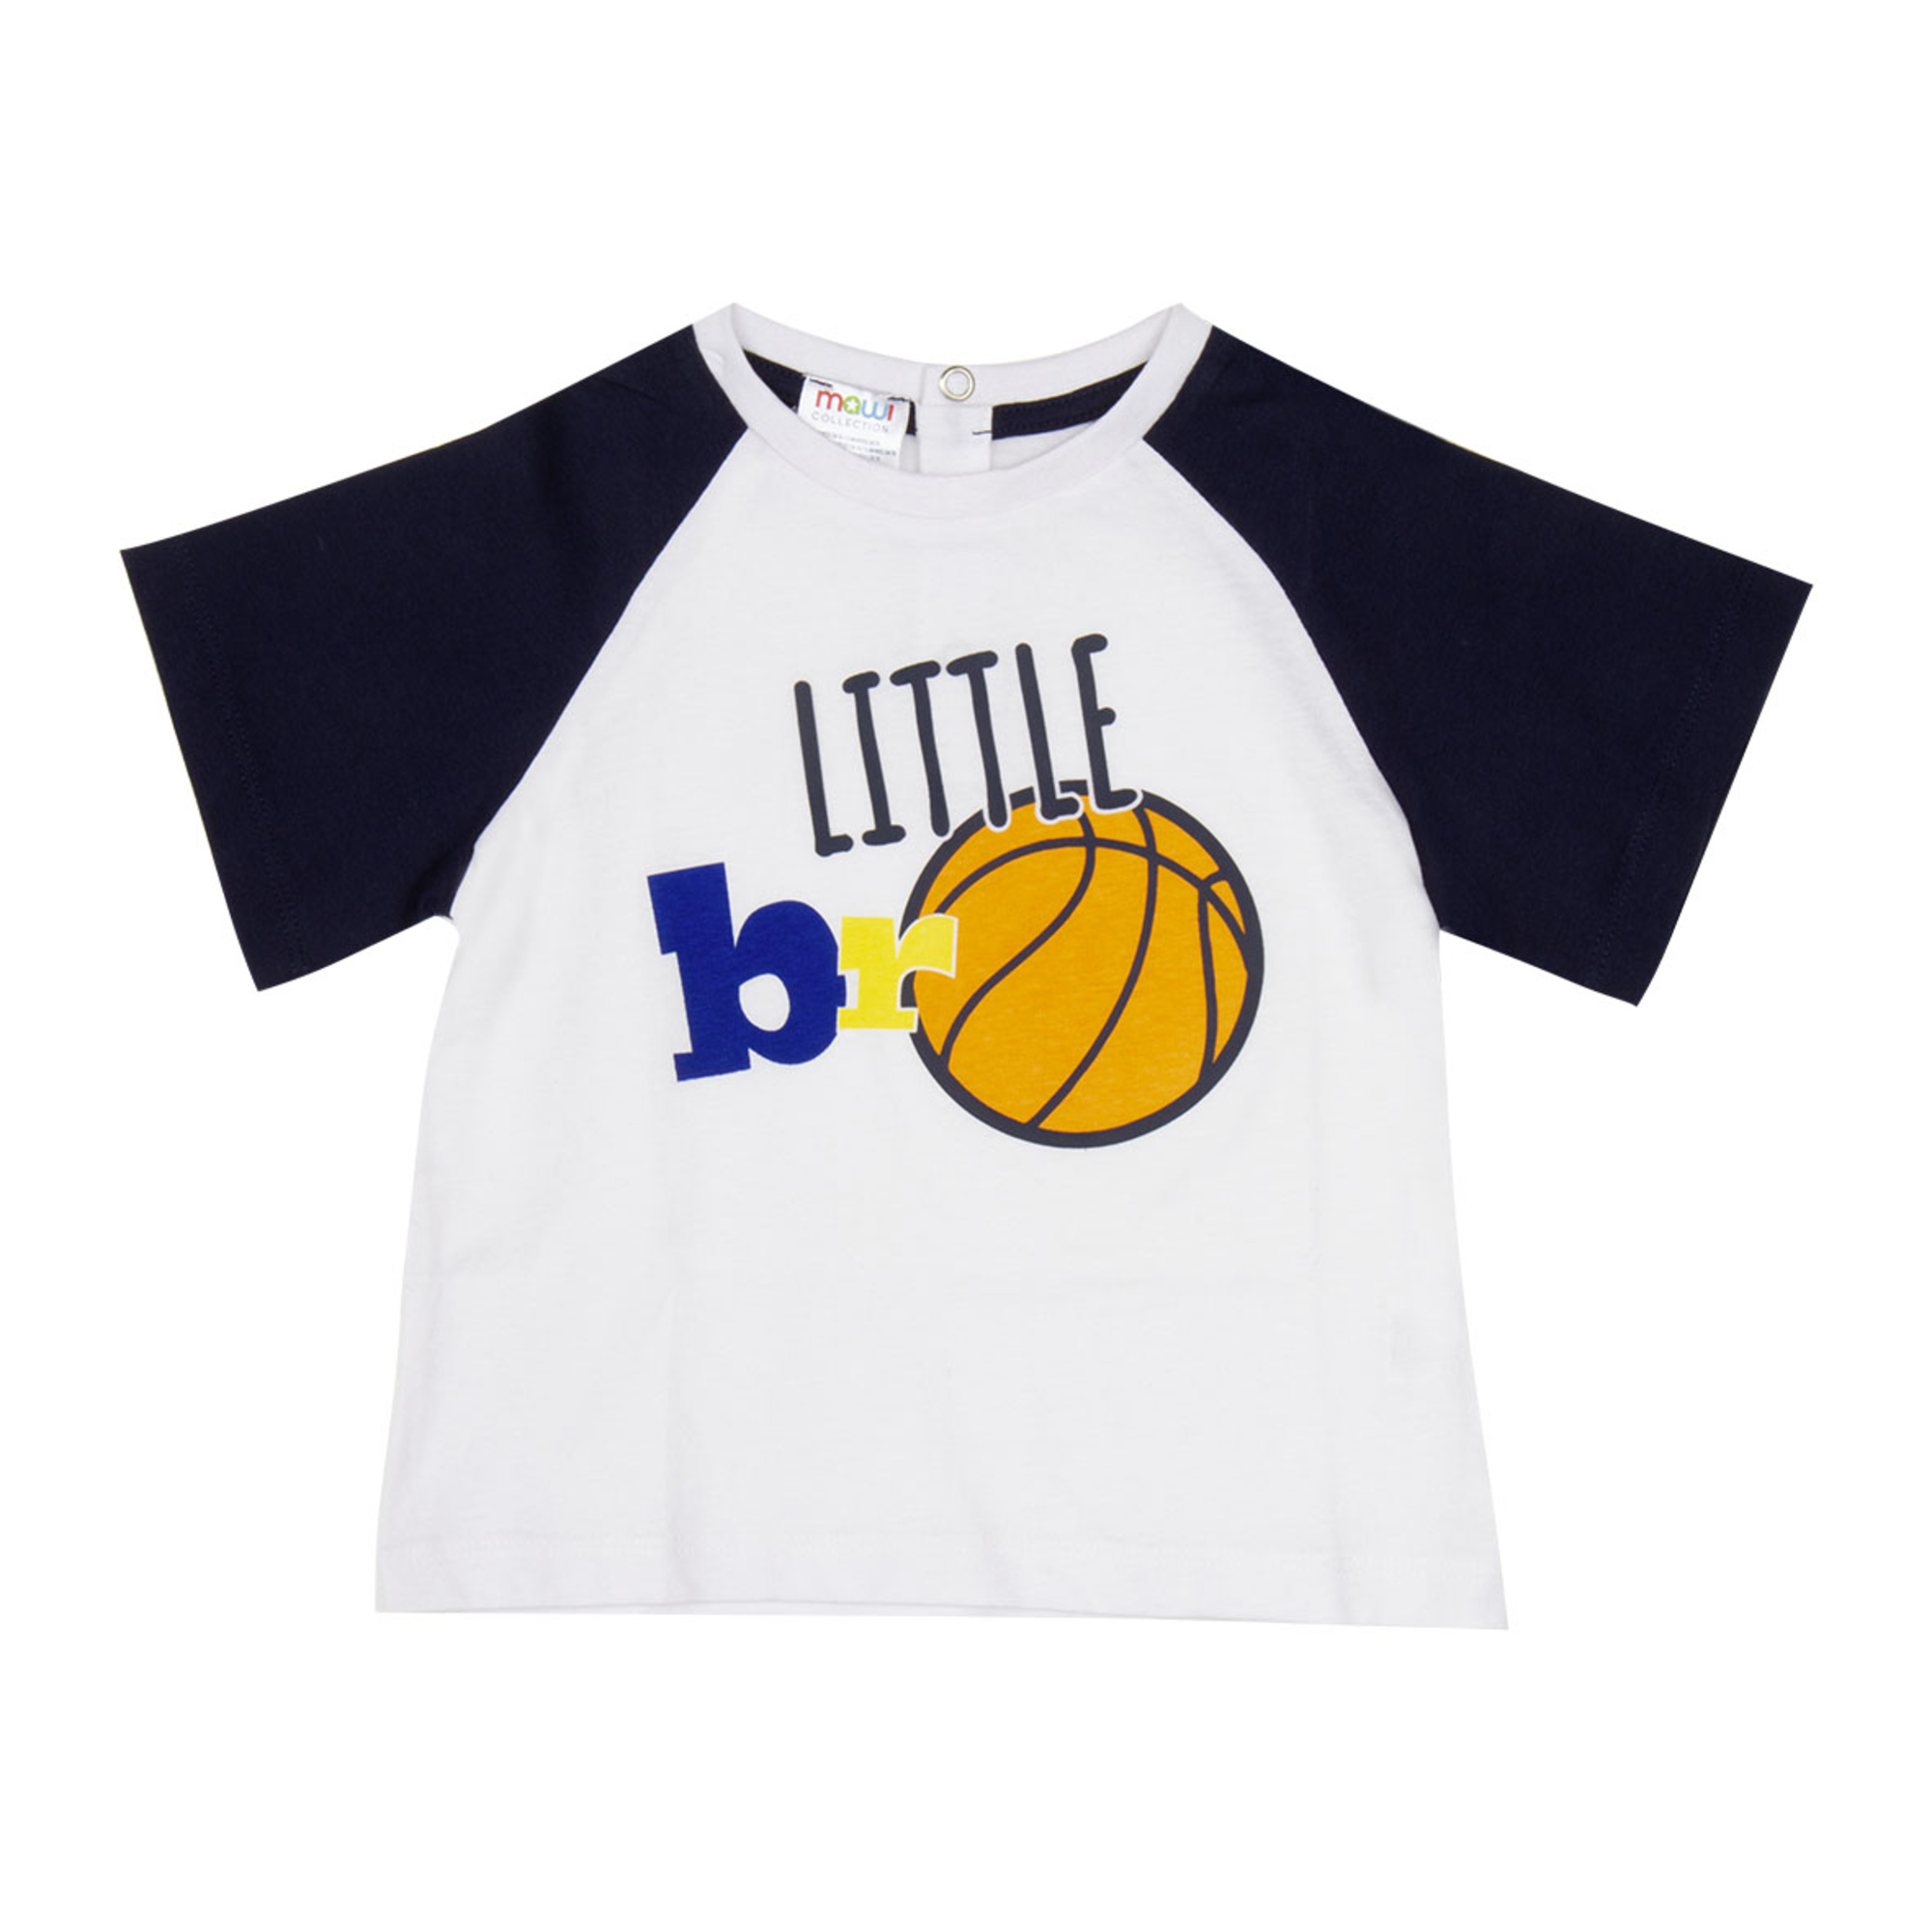 T-shirt raglan jer "little bro" - Mawi